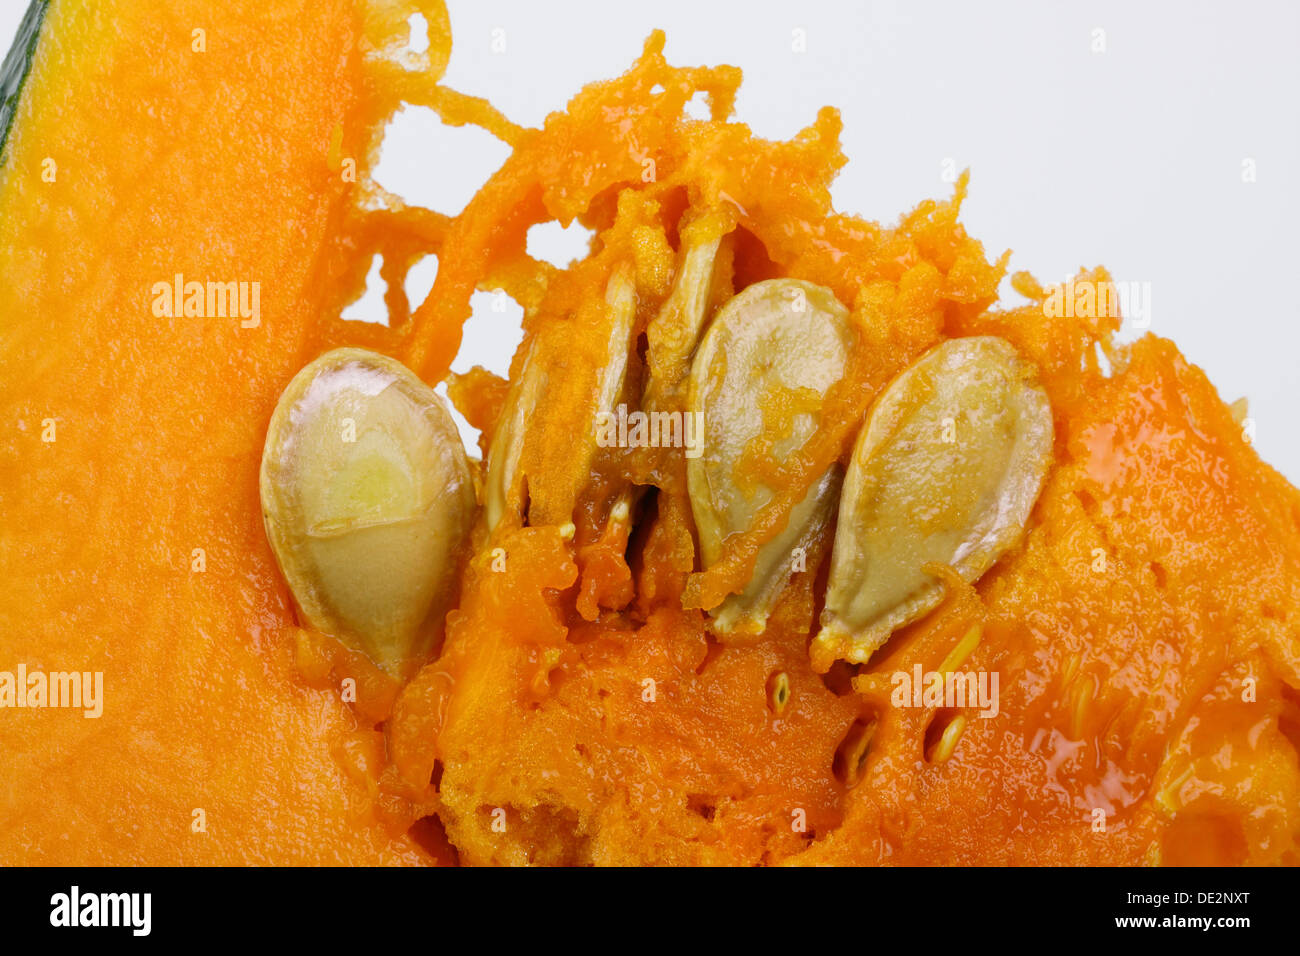 Squash or pumpkin, Muscade de Provence, Muscat de Provence pumpkin, cut with pulp and seeds Stock Photo